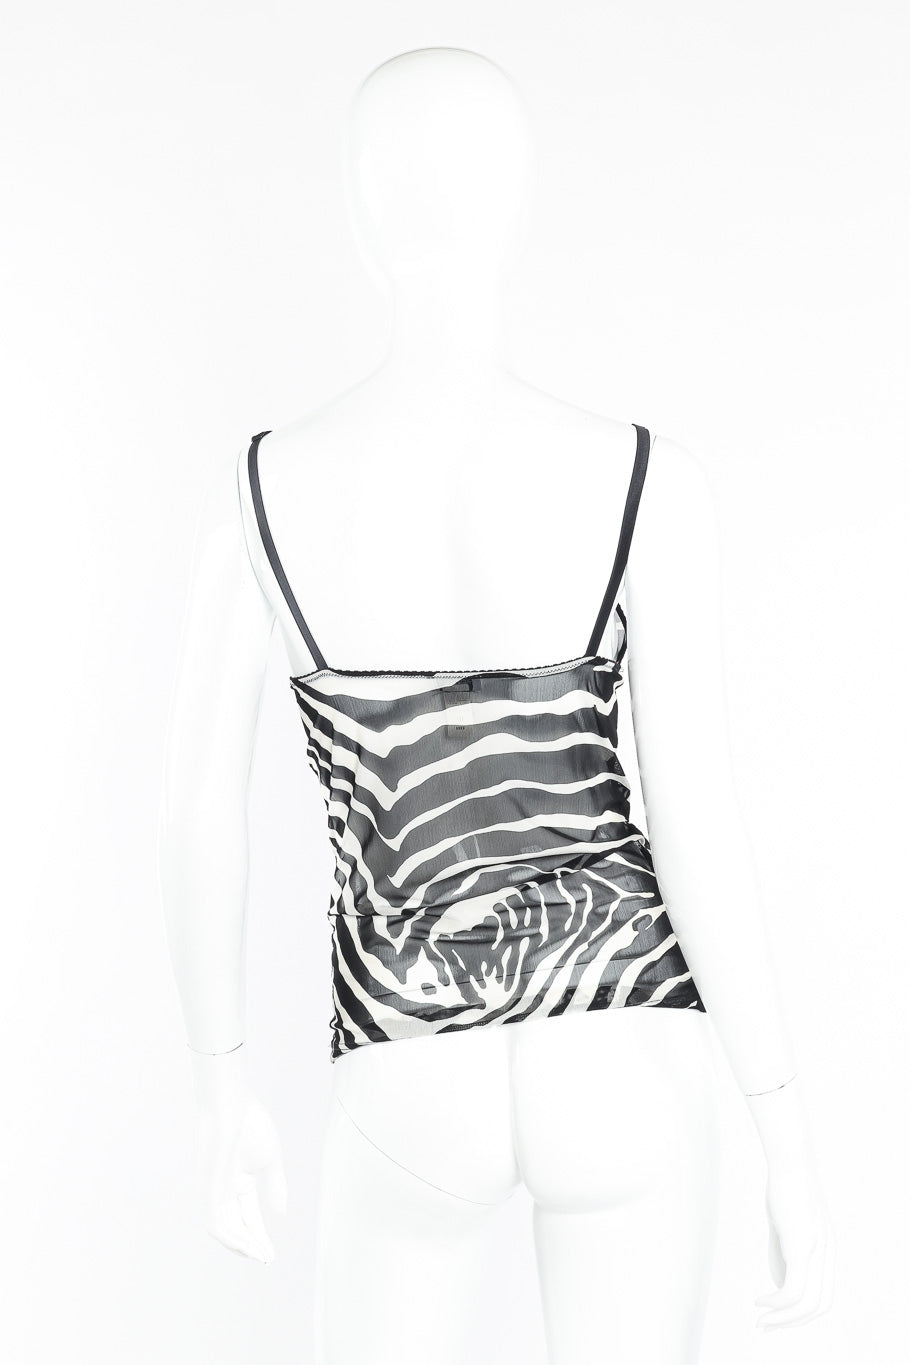 Dolce & Gabbana zebra print mesh camisole top on mannequin @recessla